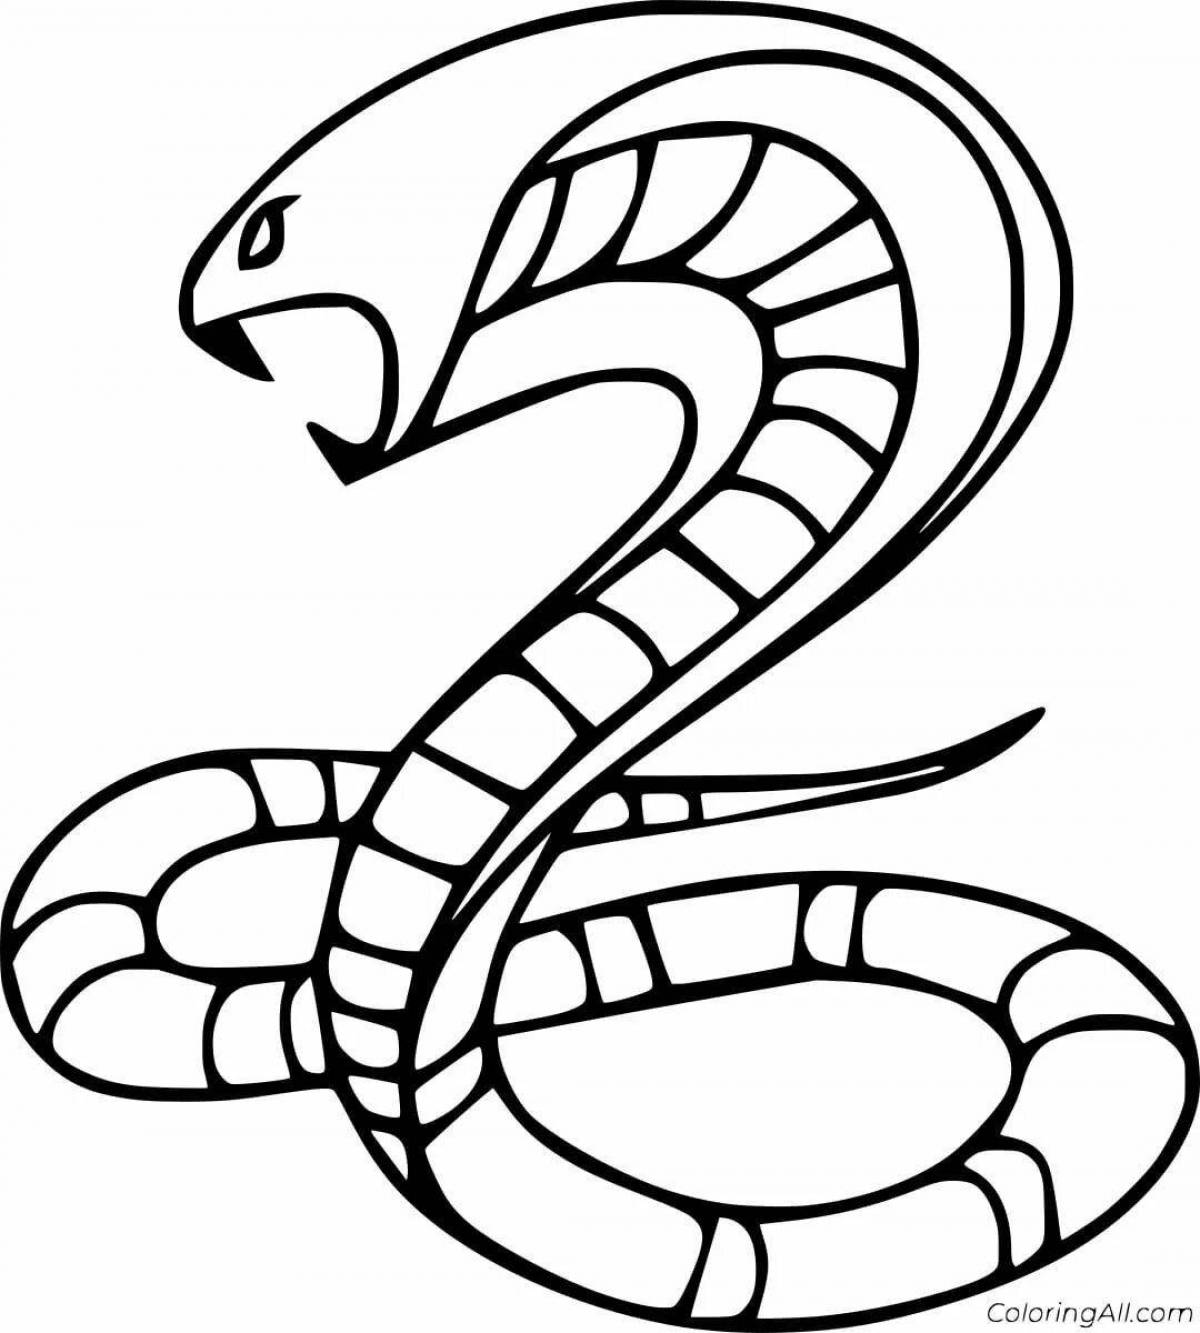 Snake for children 5 6 years old #17